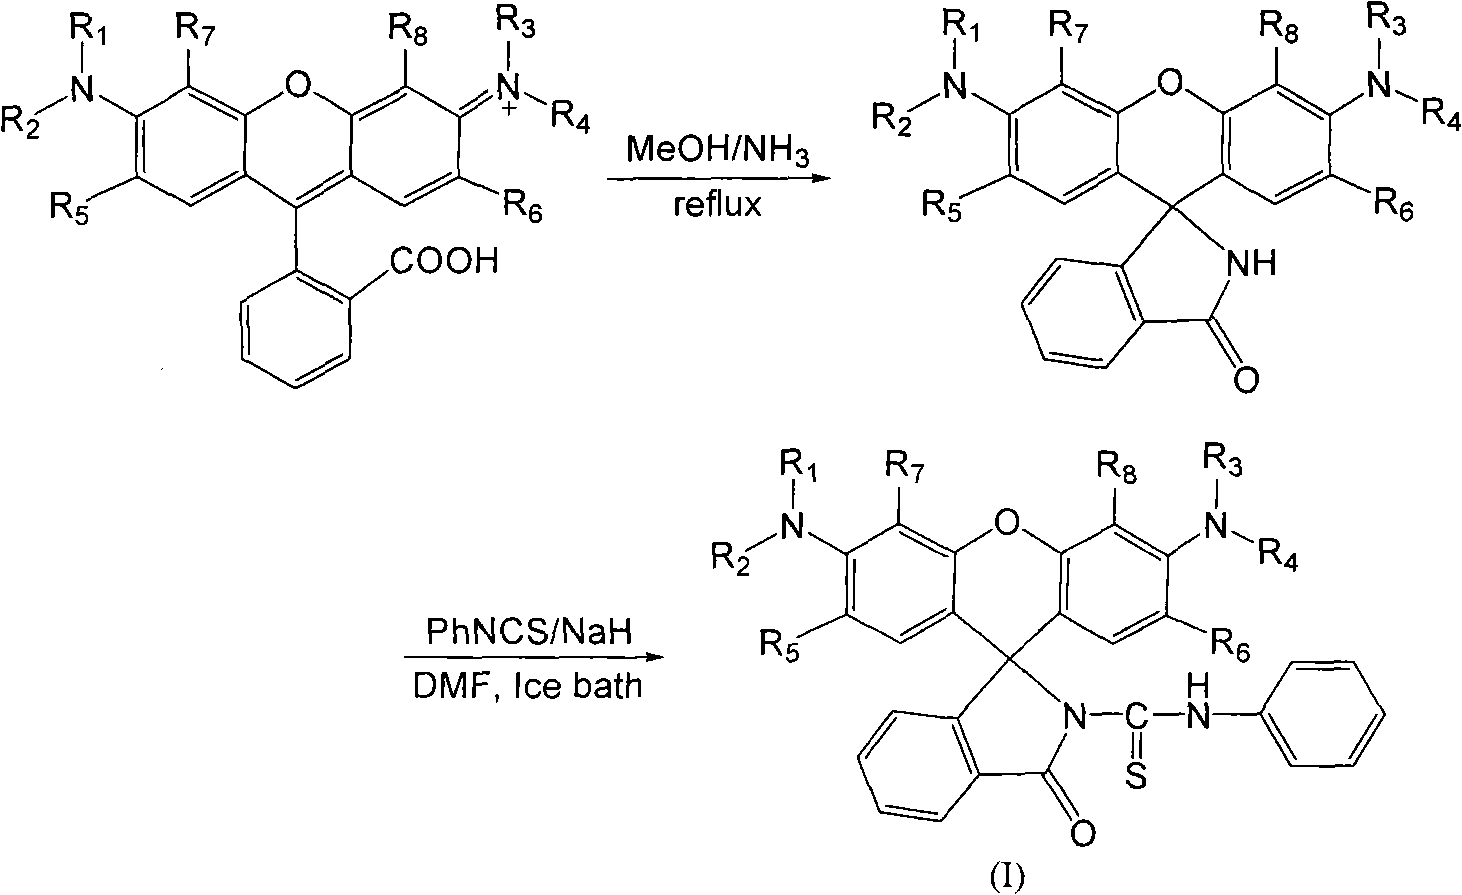 N-(rhodamine 6G) lactam-N'-phenylthiourea derivative fluorescent probe and preparation method